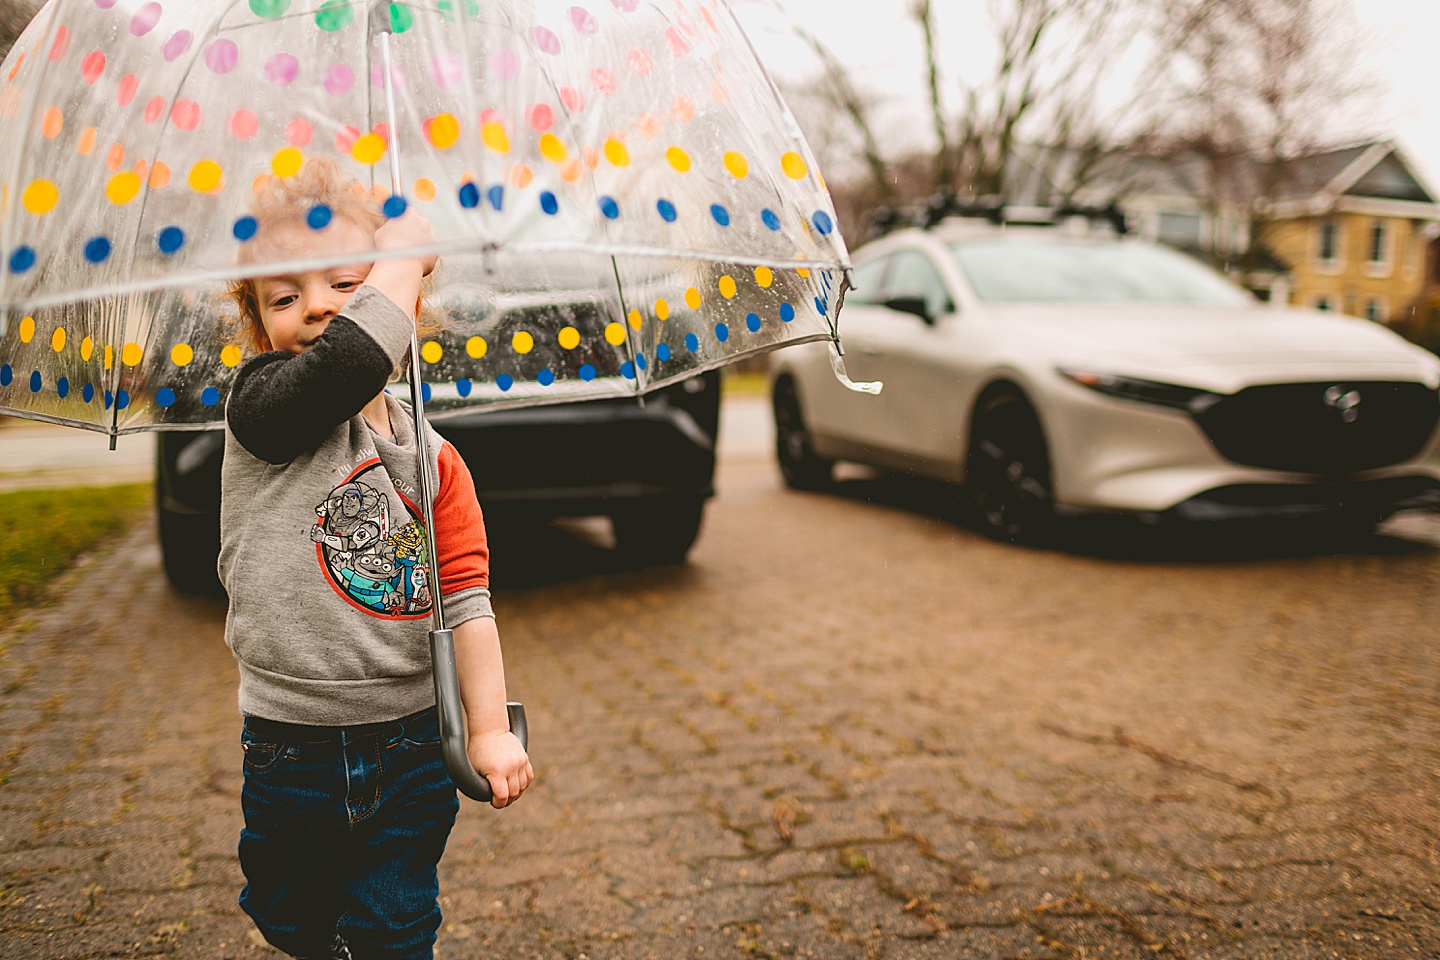 Toddler walking around with umbrella in the rain